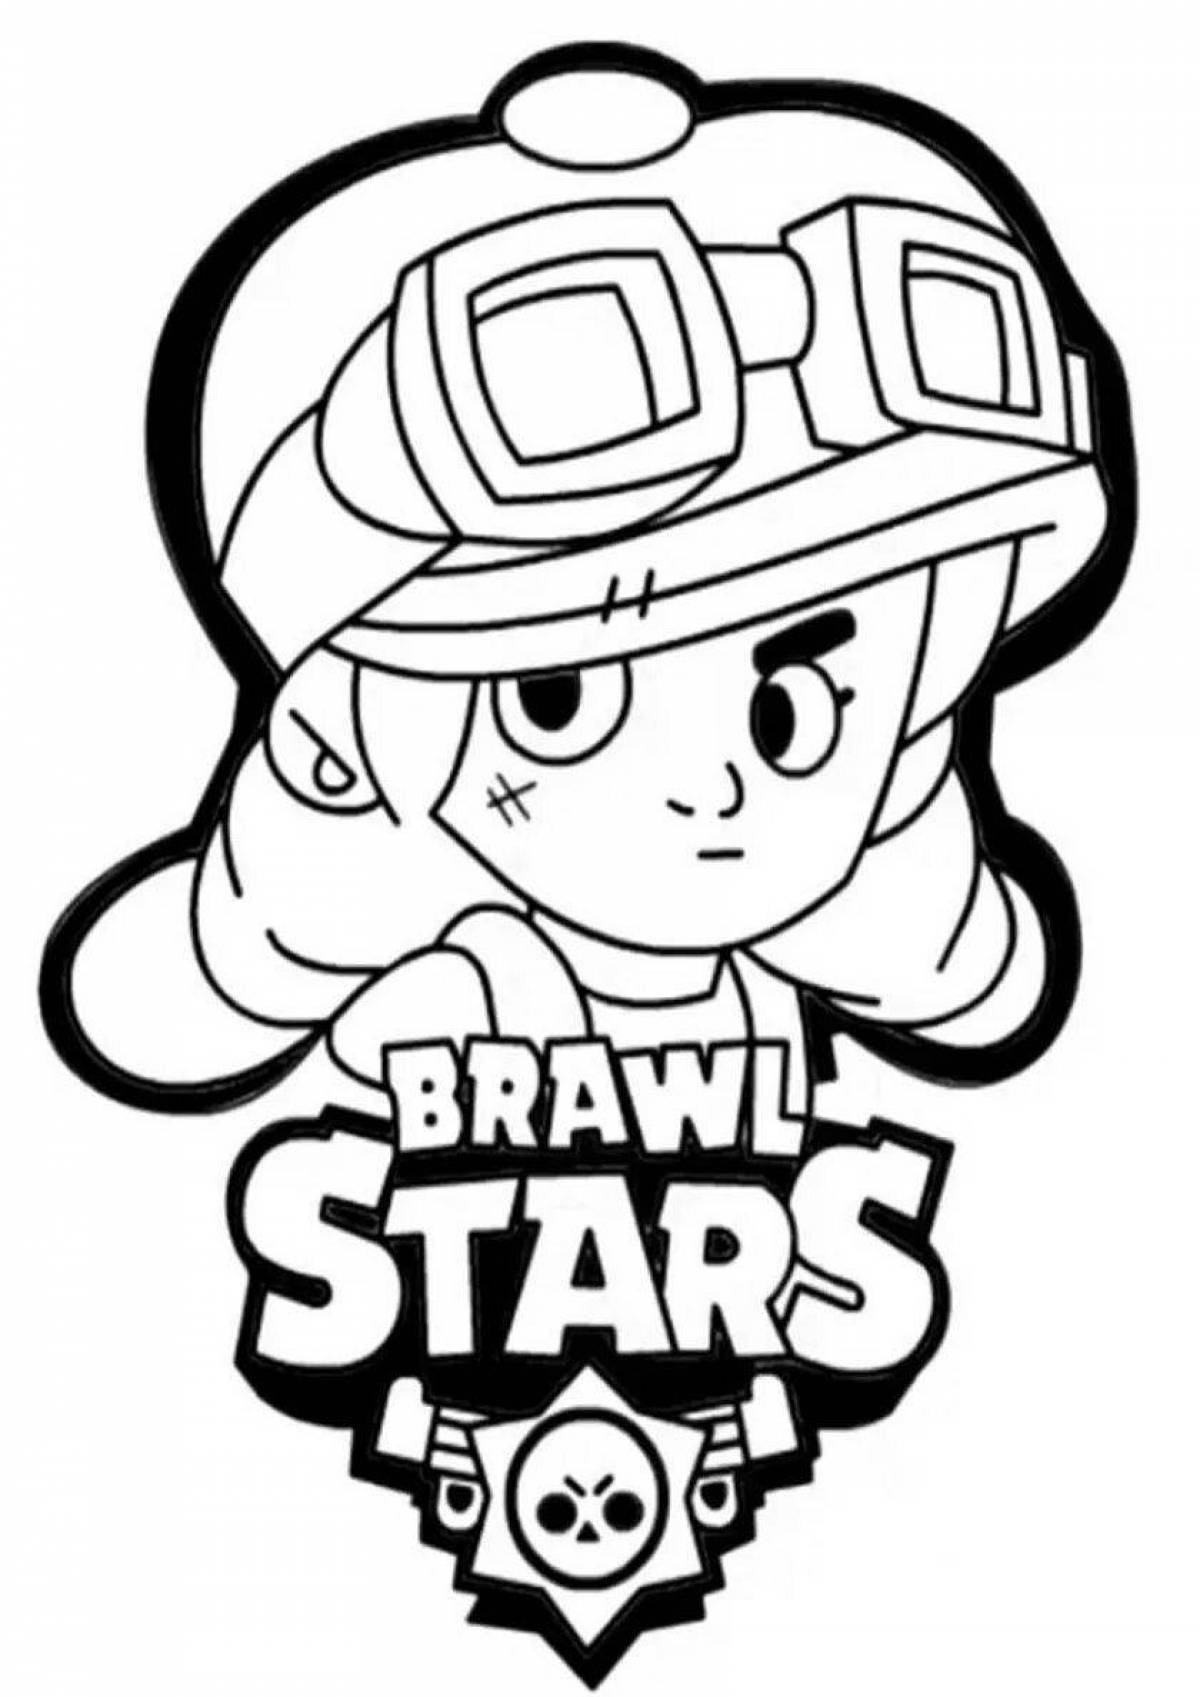 Stu Bravo charming stars coloring page